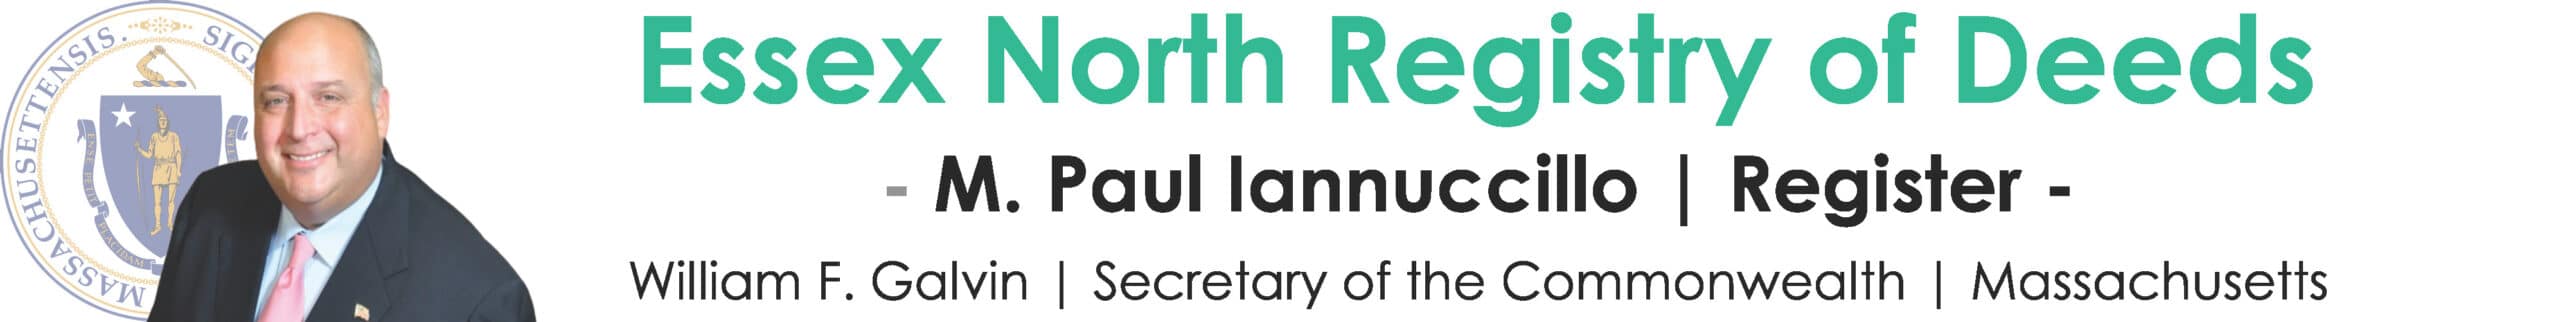 Essex North Registry of Deeds